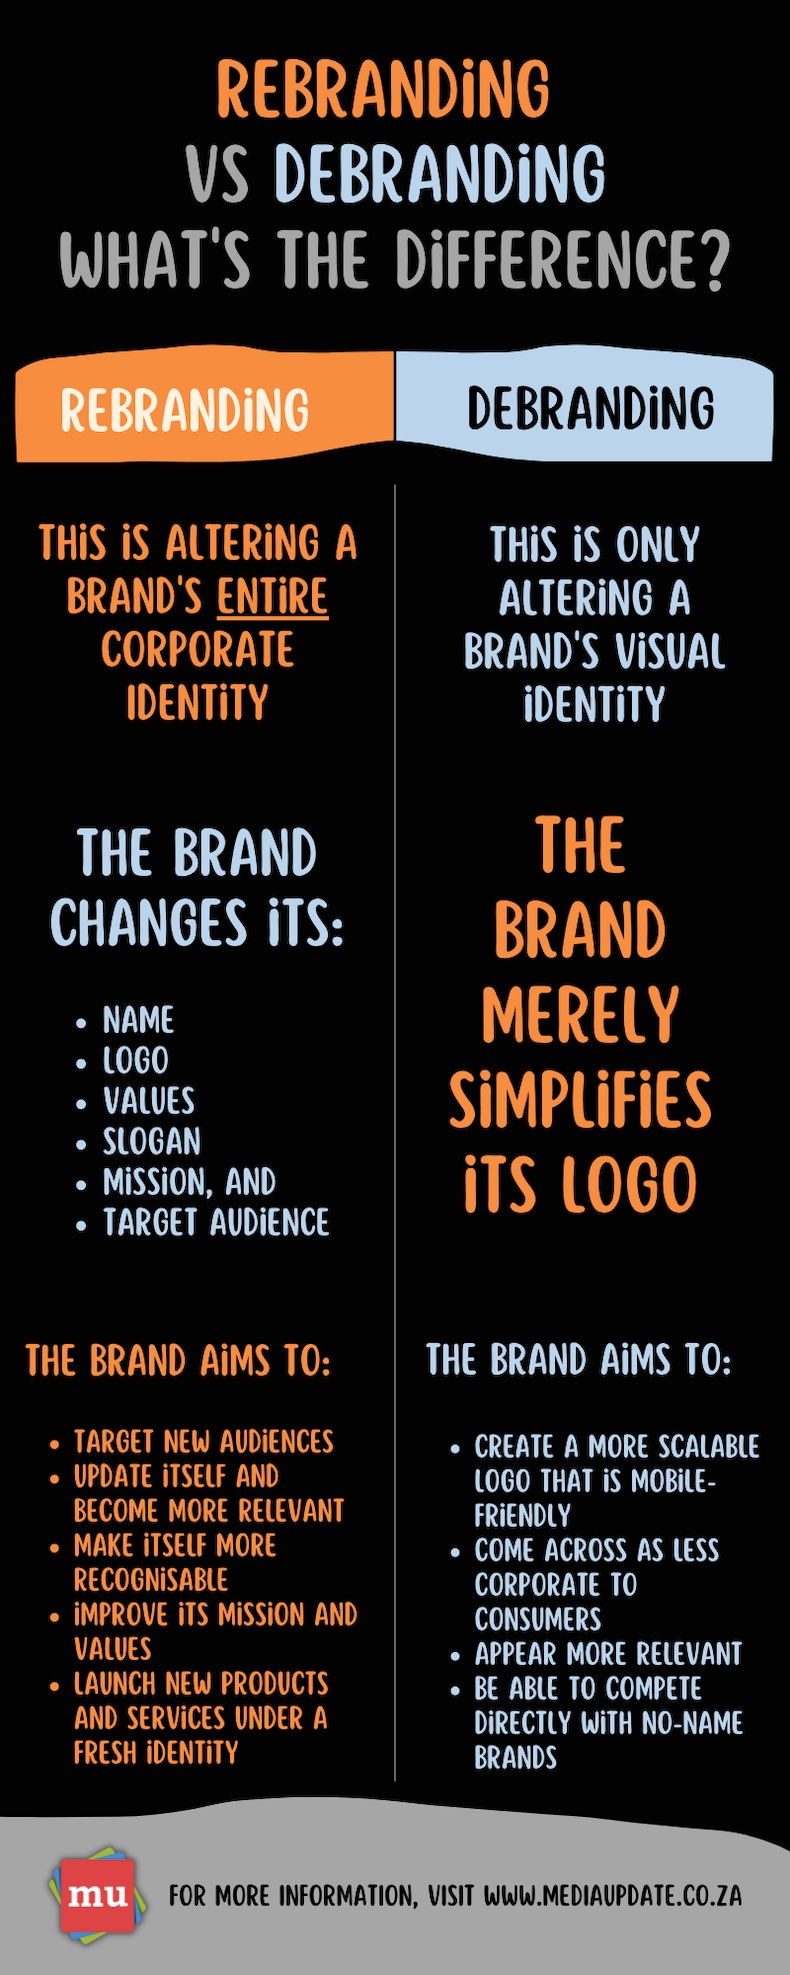 Rebranding vs debranding infographic